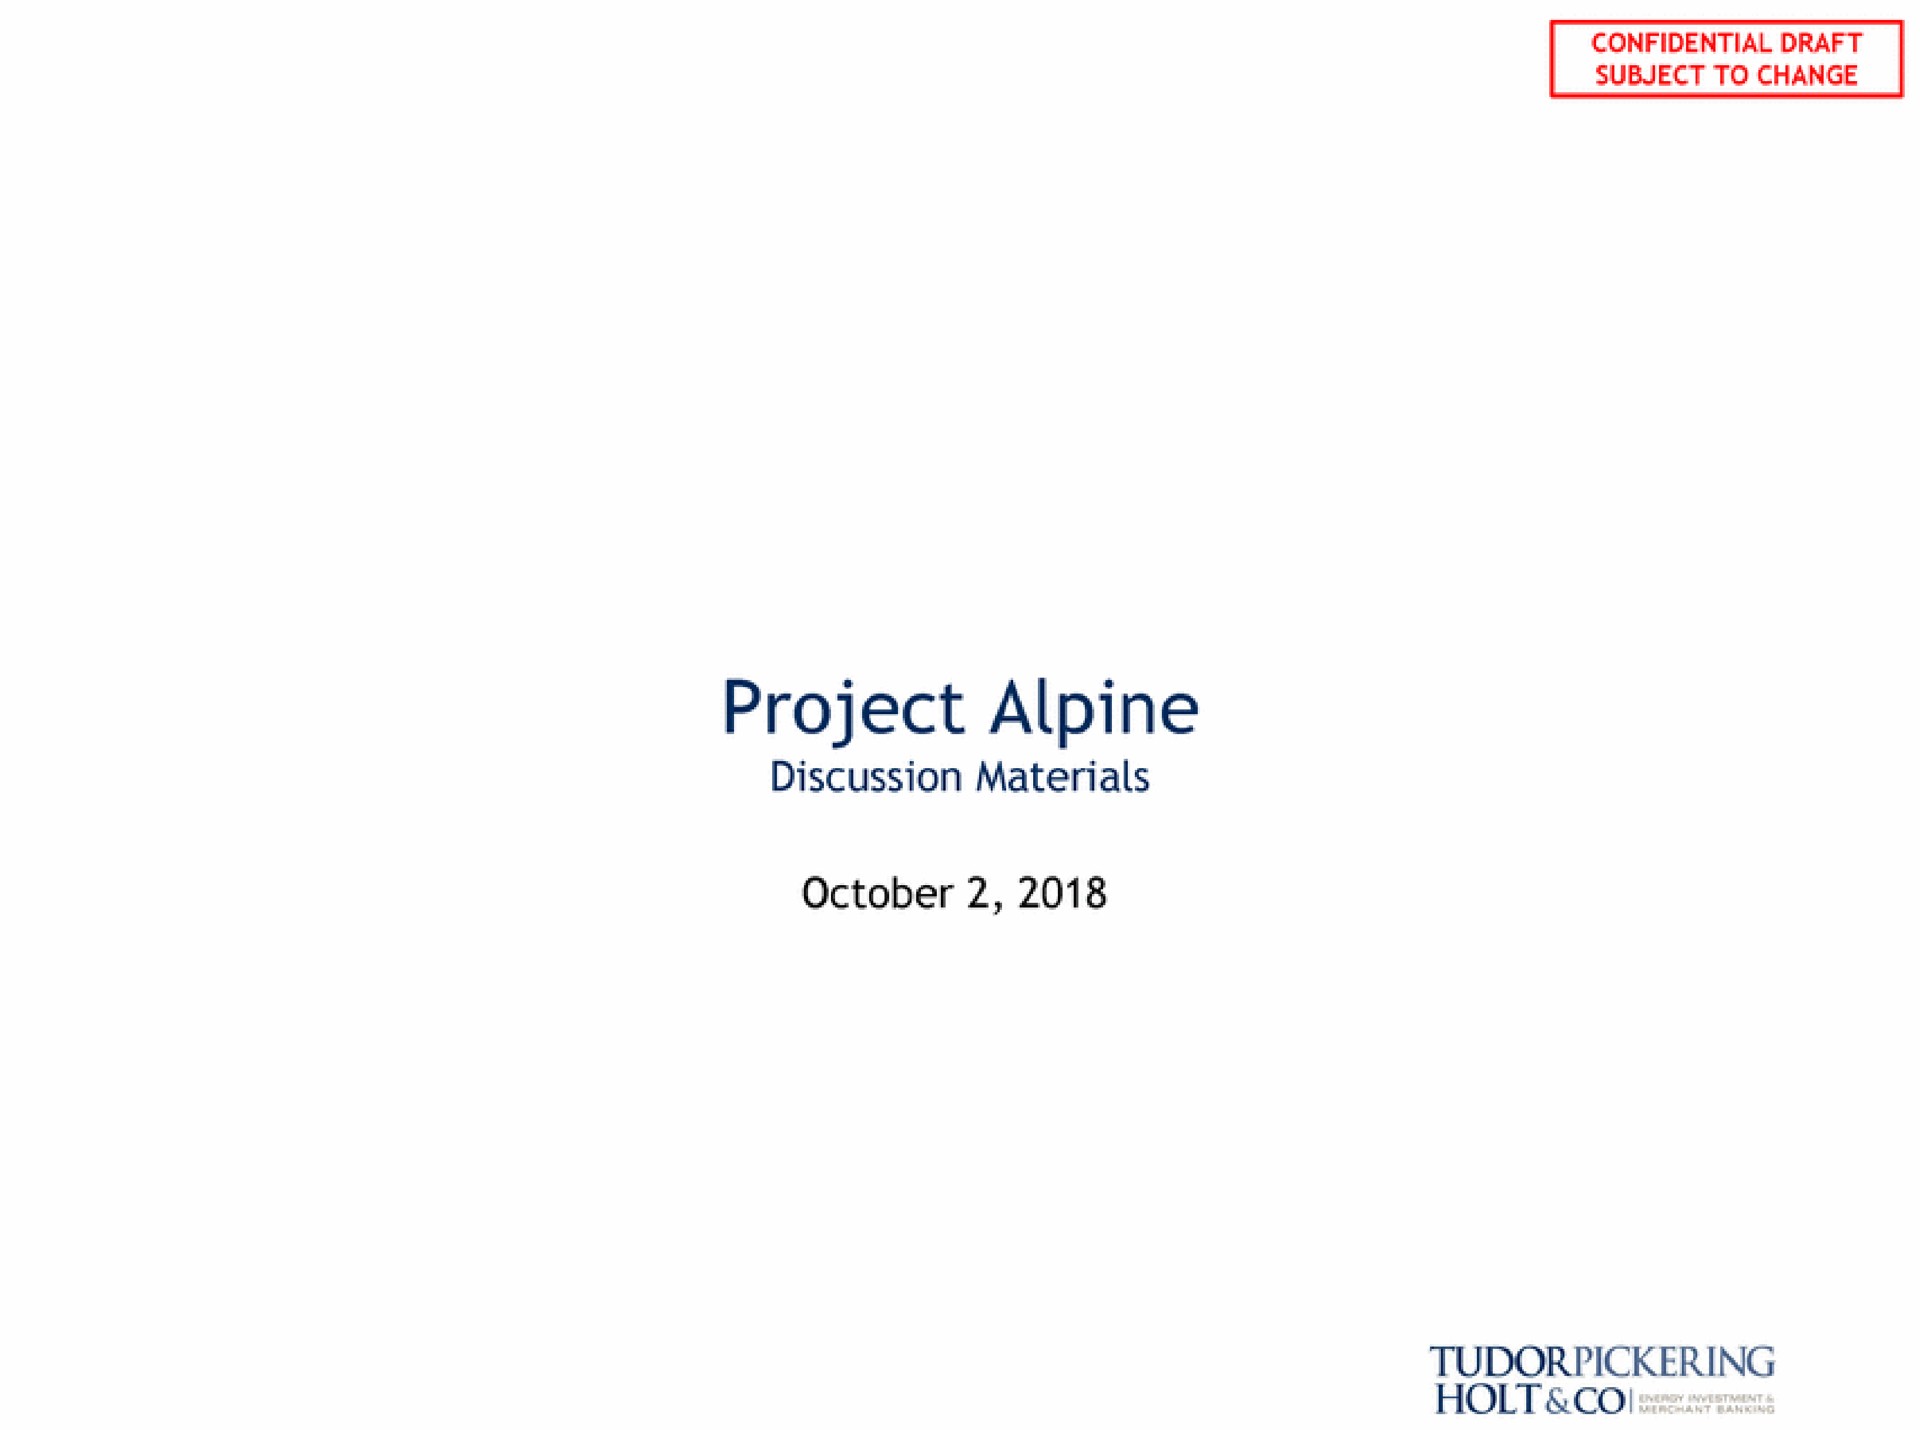 project alpine holt | Tudor, Pickering, Holt & Co